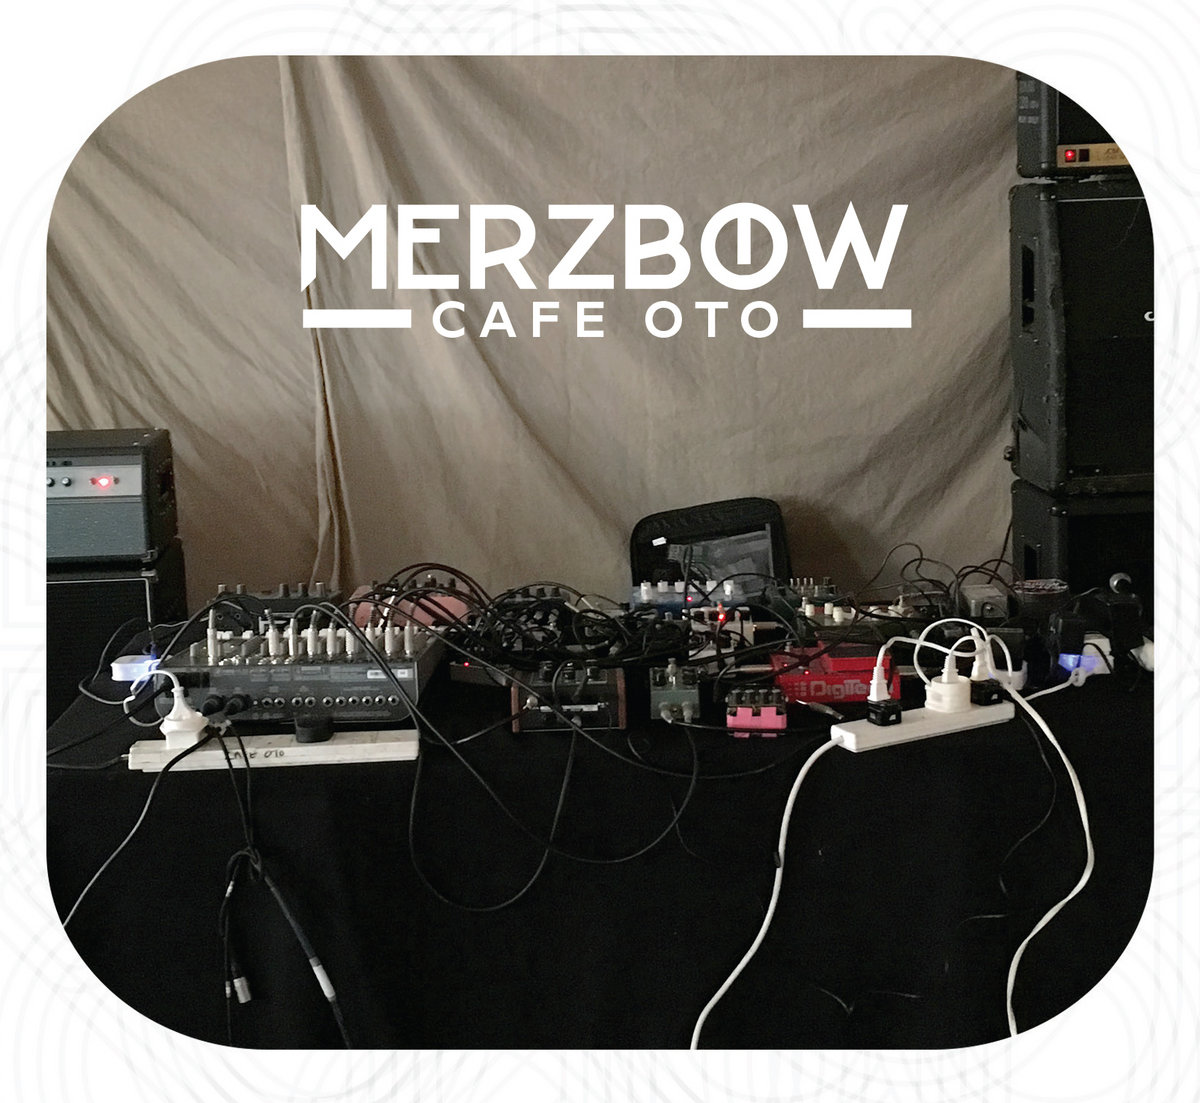 Merzbow Cafe Oto Zip Download